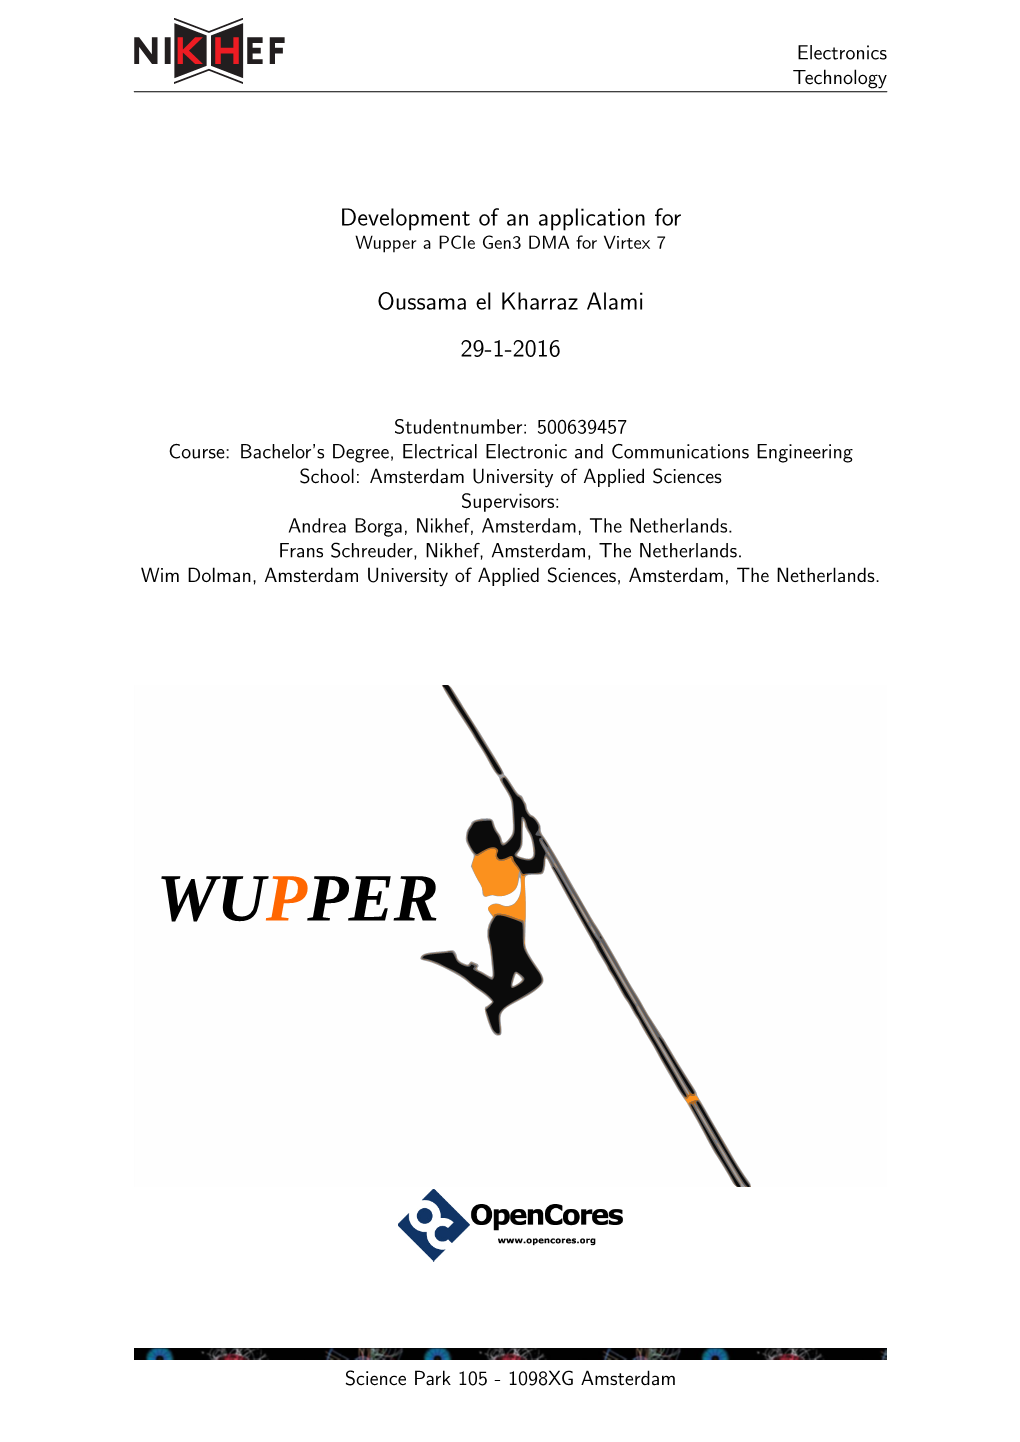 Development of an Application for Wupper a Pcie Gen3 DMA for Virtex 7